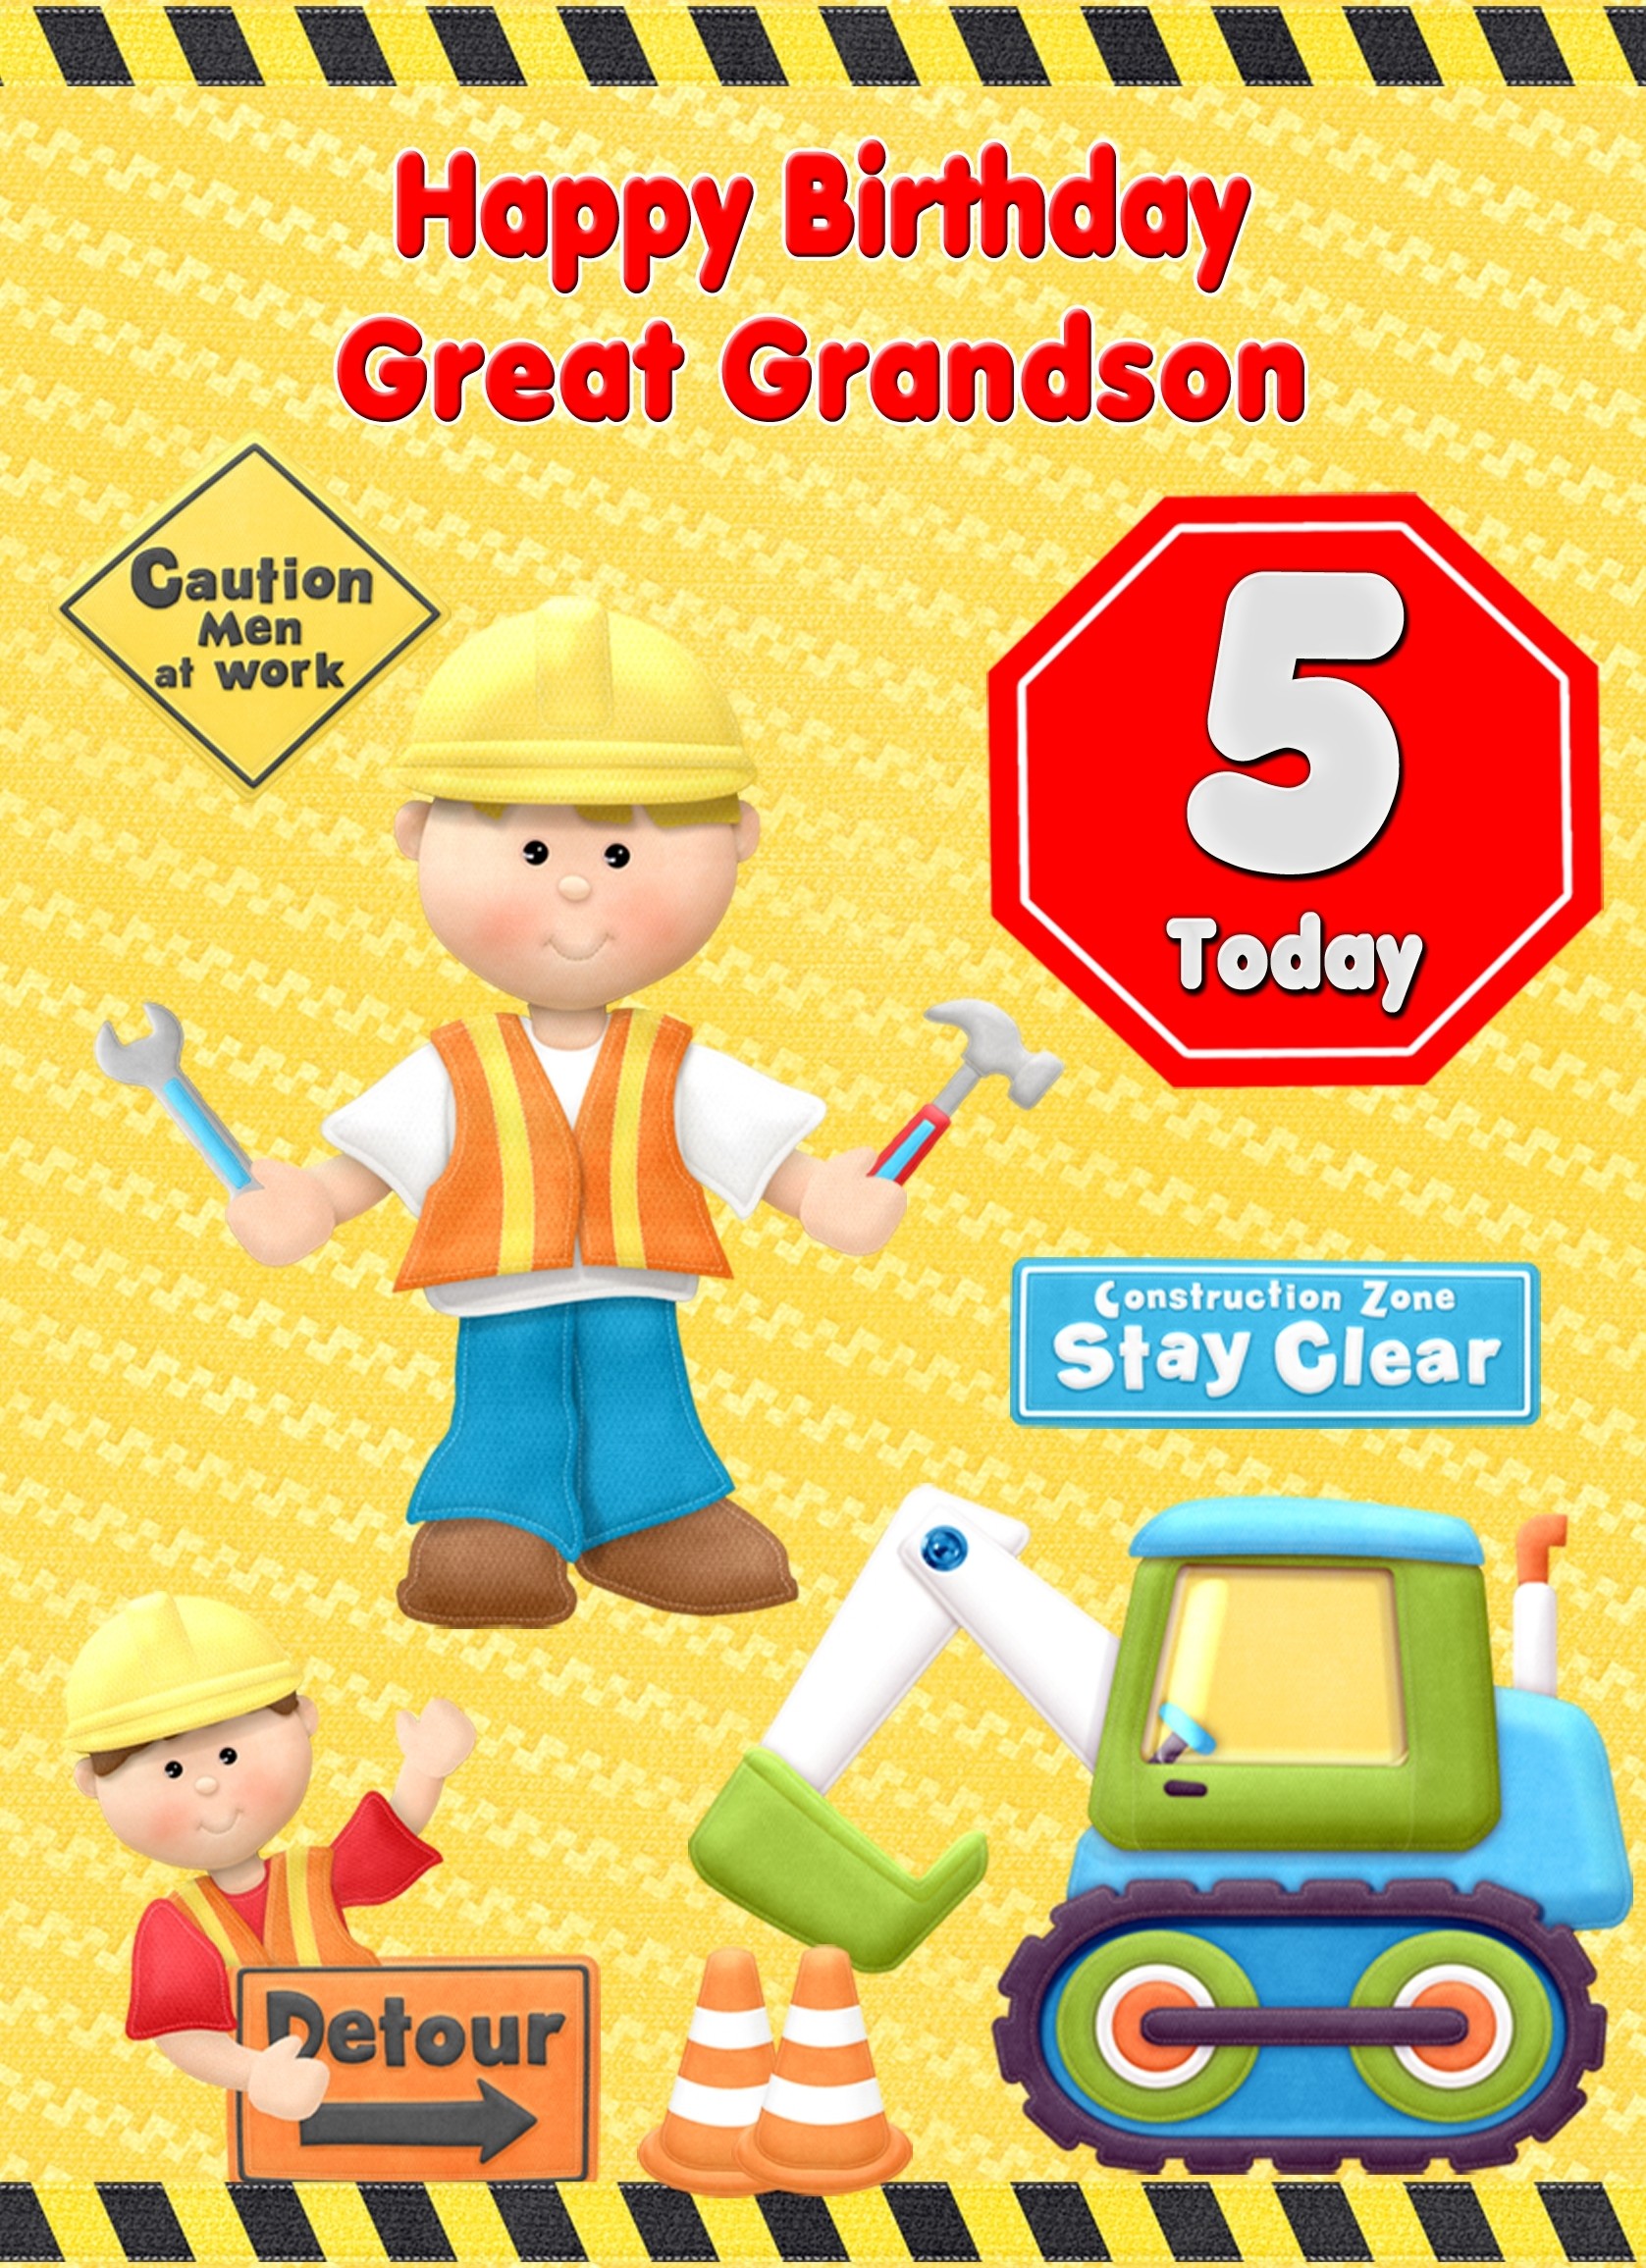 Kids 5th Birthday Builder Cartoon Card for Great Grandson